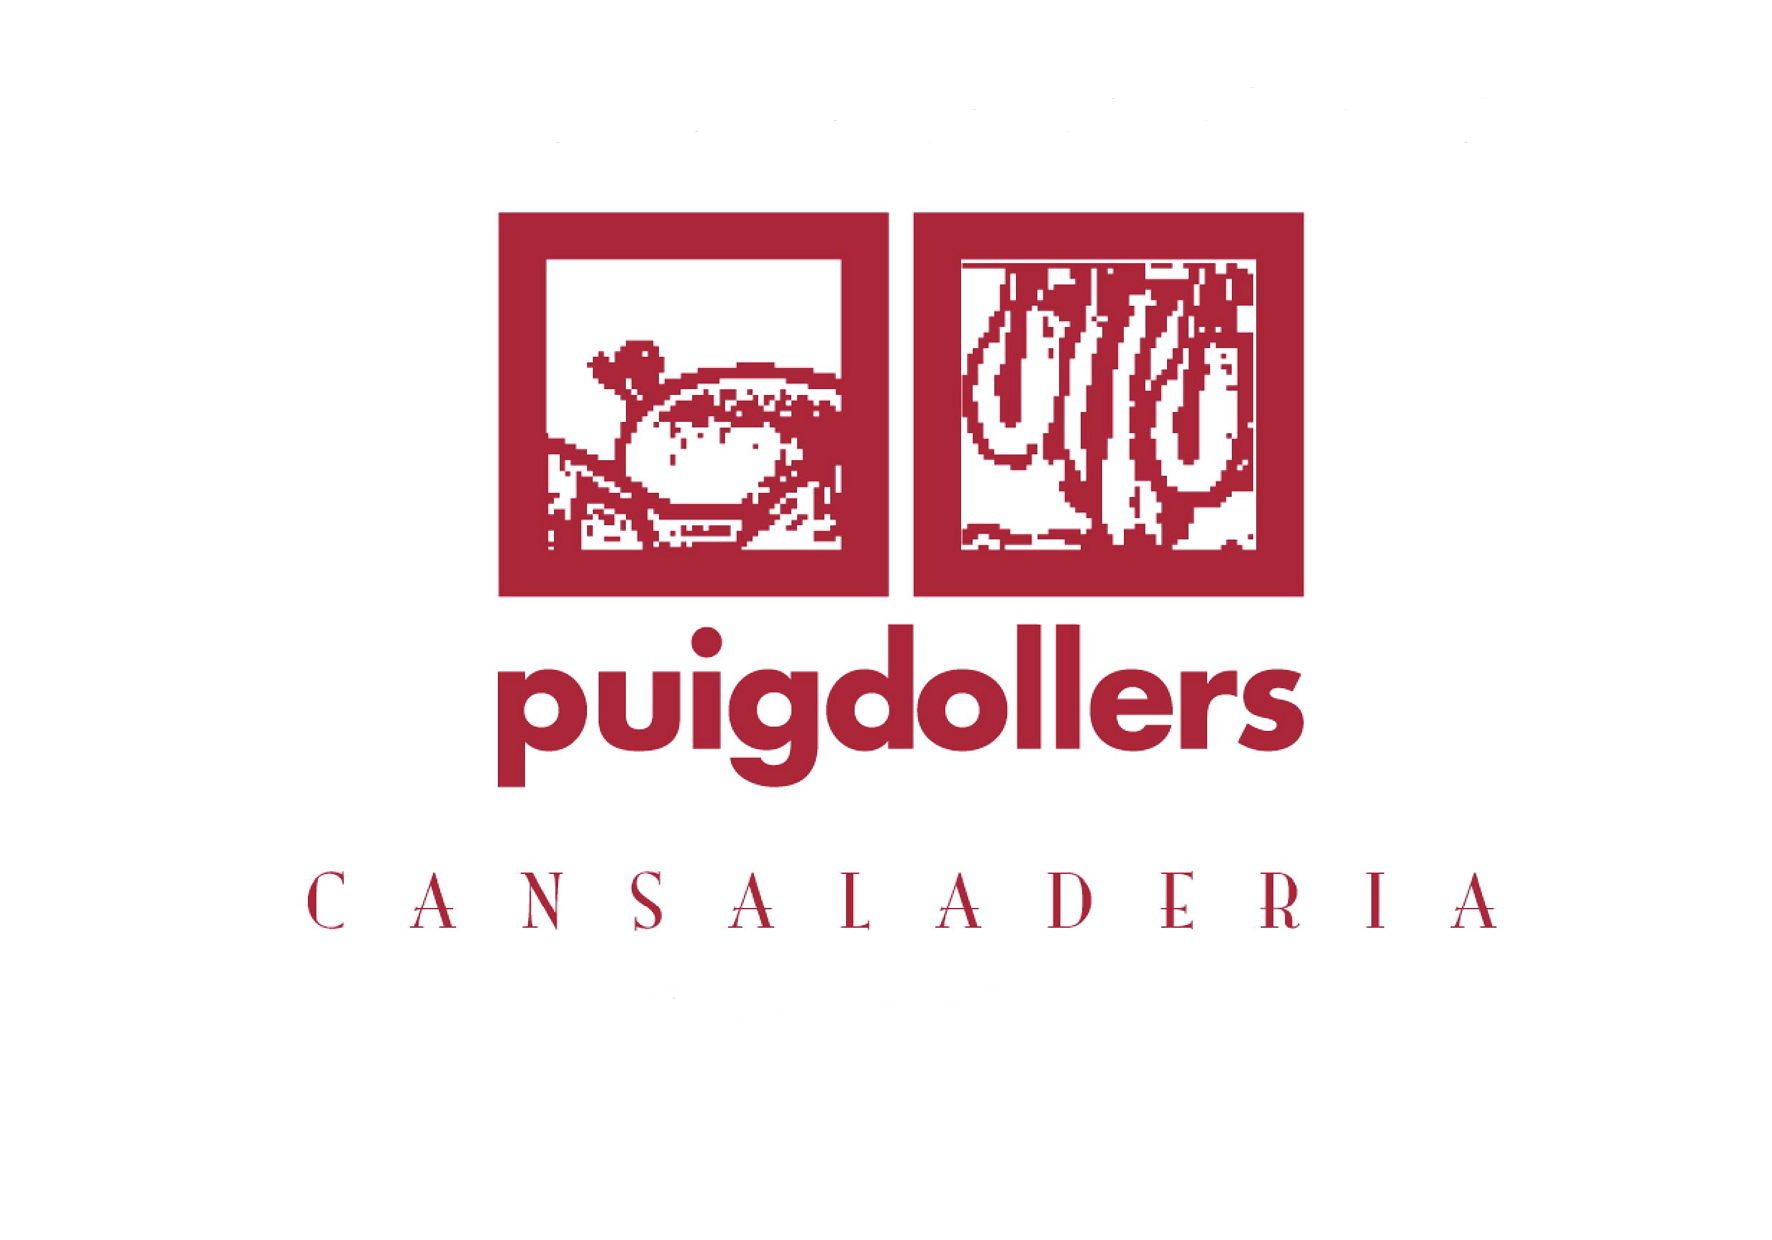 CANSALADERIA PUIGDOLLERS